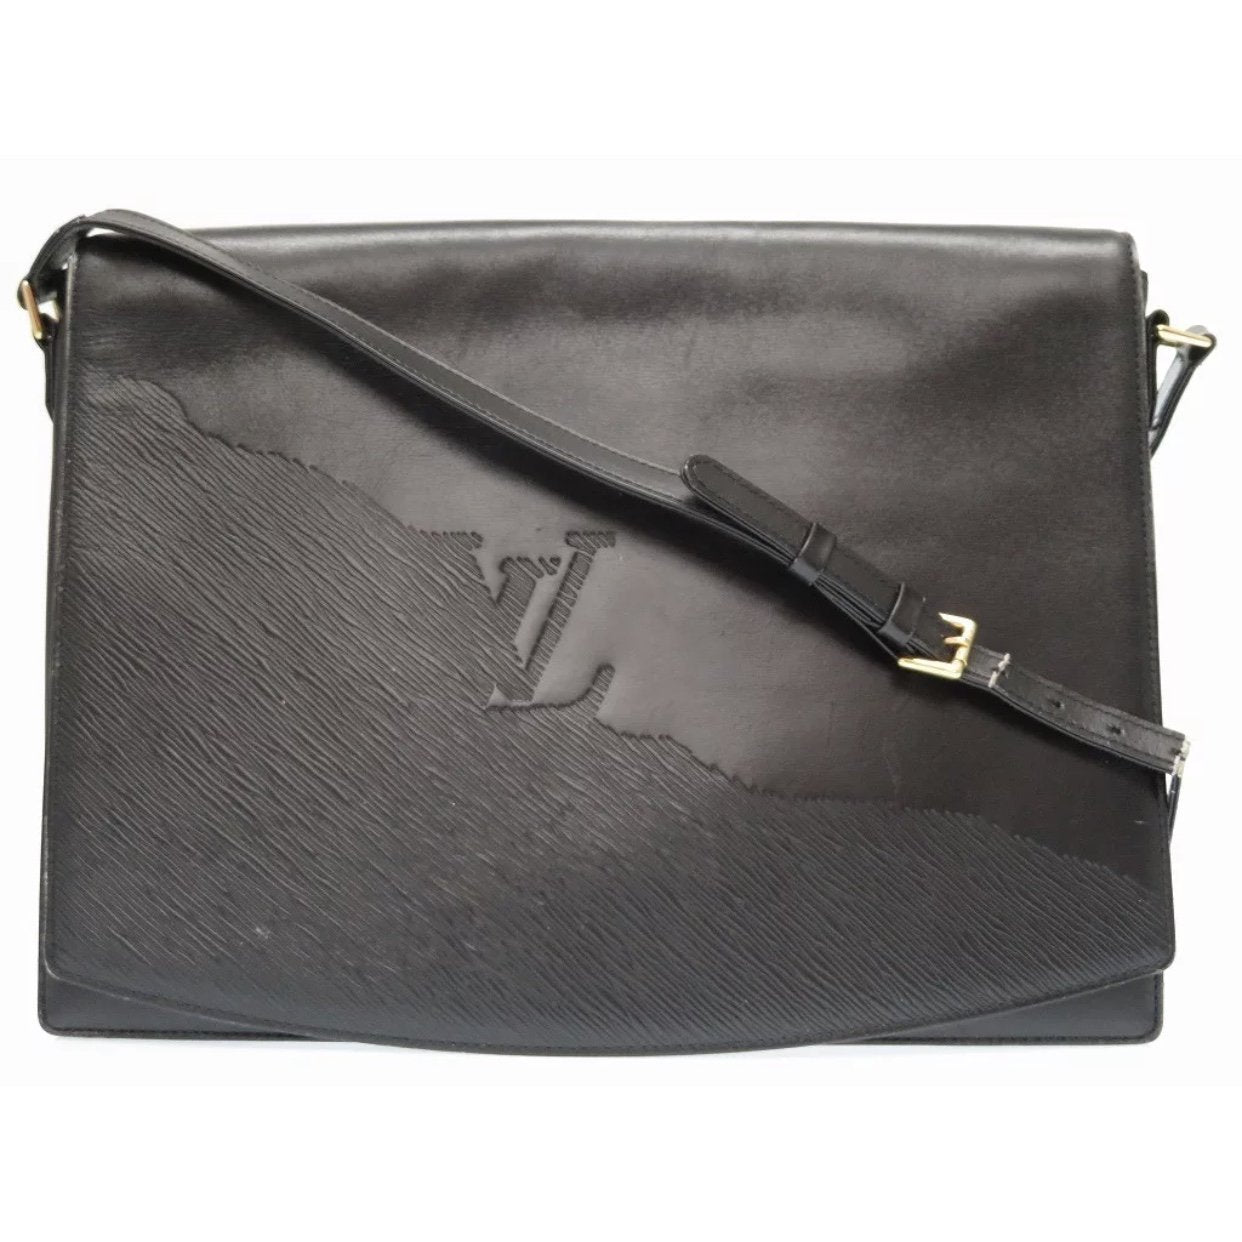 Buy Authentic Pre-owned Louis Vuitton Epi Leather Black Noir Phoenix MM  Shoulder Tote Bag M50590 220104 from Japan - Buy authentic Plus exclusive  items from Japan